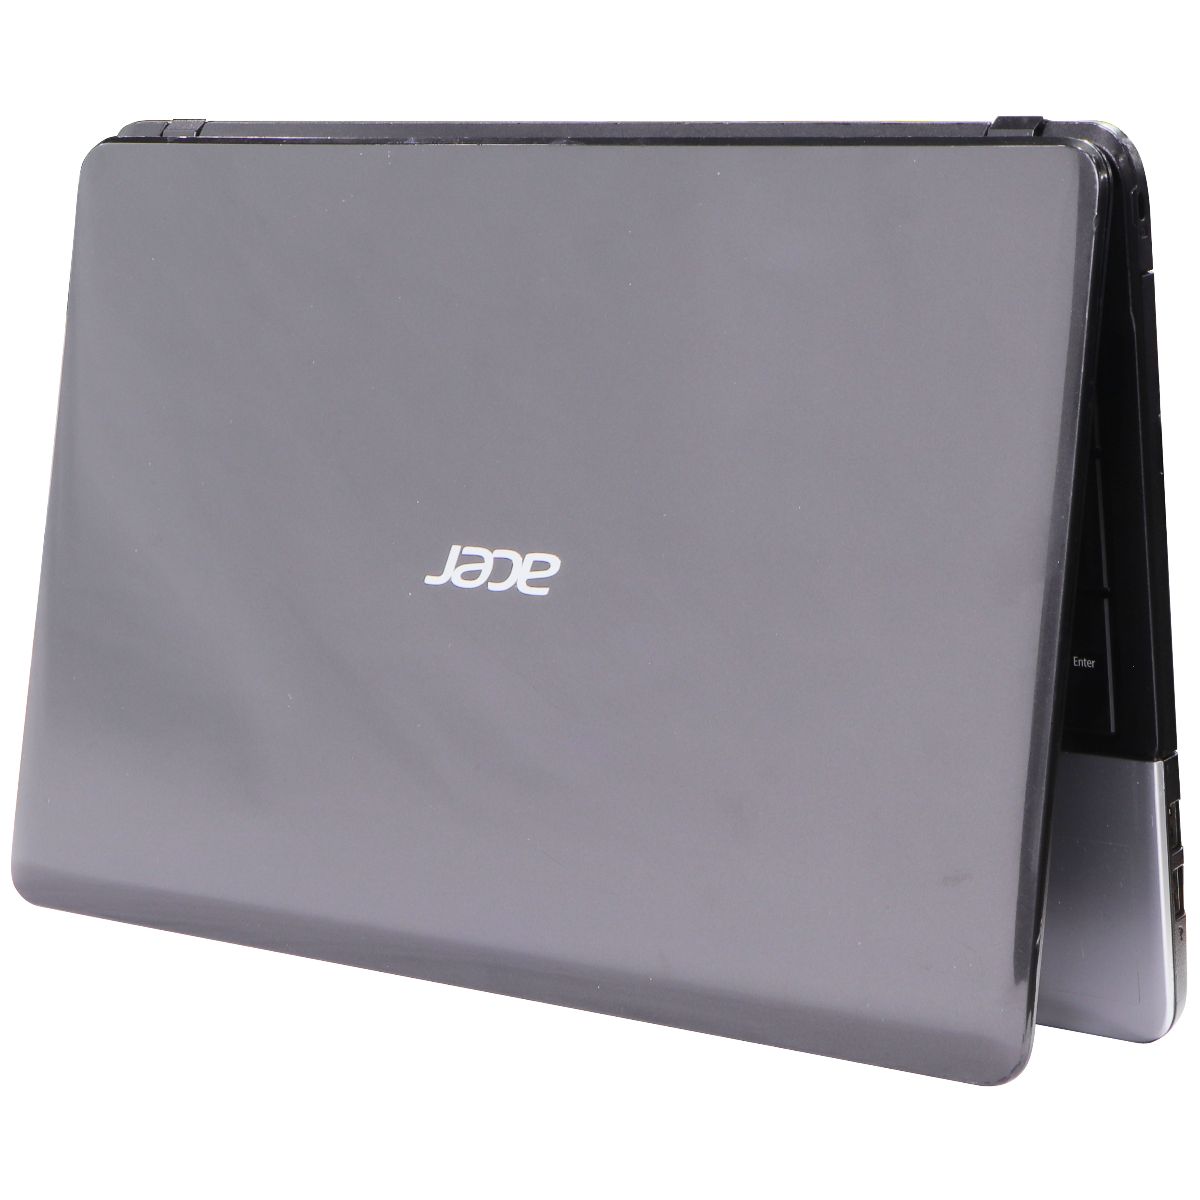 Acer Aspire E1-531-4665 (15.6-in) Laptop Intel Pentium B960/500GB/4GB - Black Laptops - PC Laptops & Netbooks Acer    - Simple Cell Bulk Wholesale Pricing - USA Seller